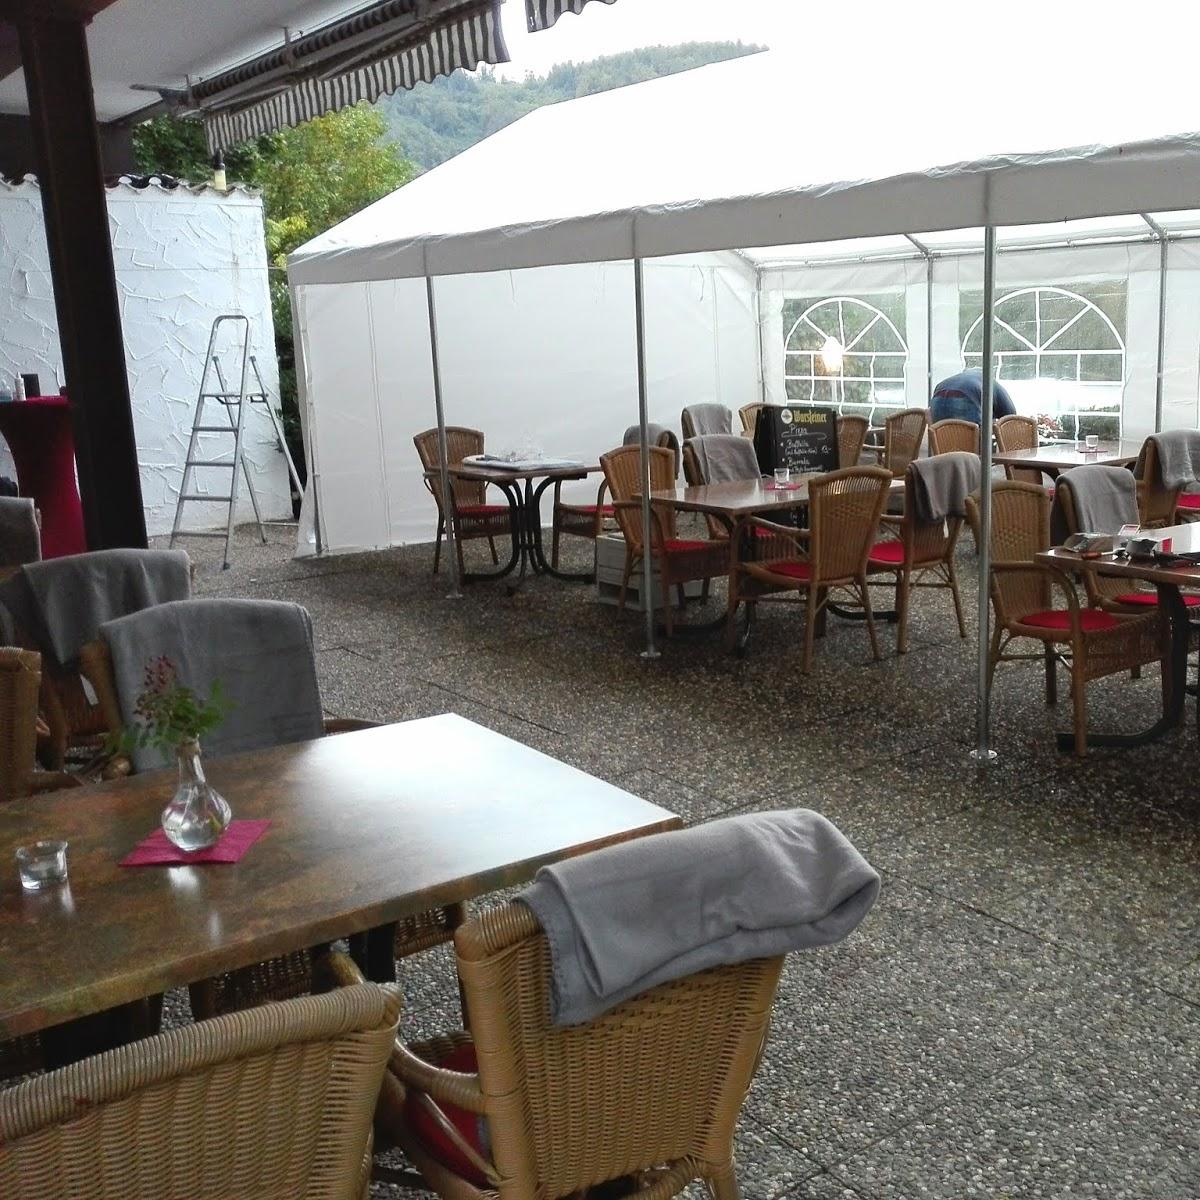 Restaurant "Restaurant Ankerseele" in  Eberbach